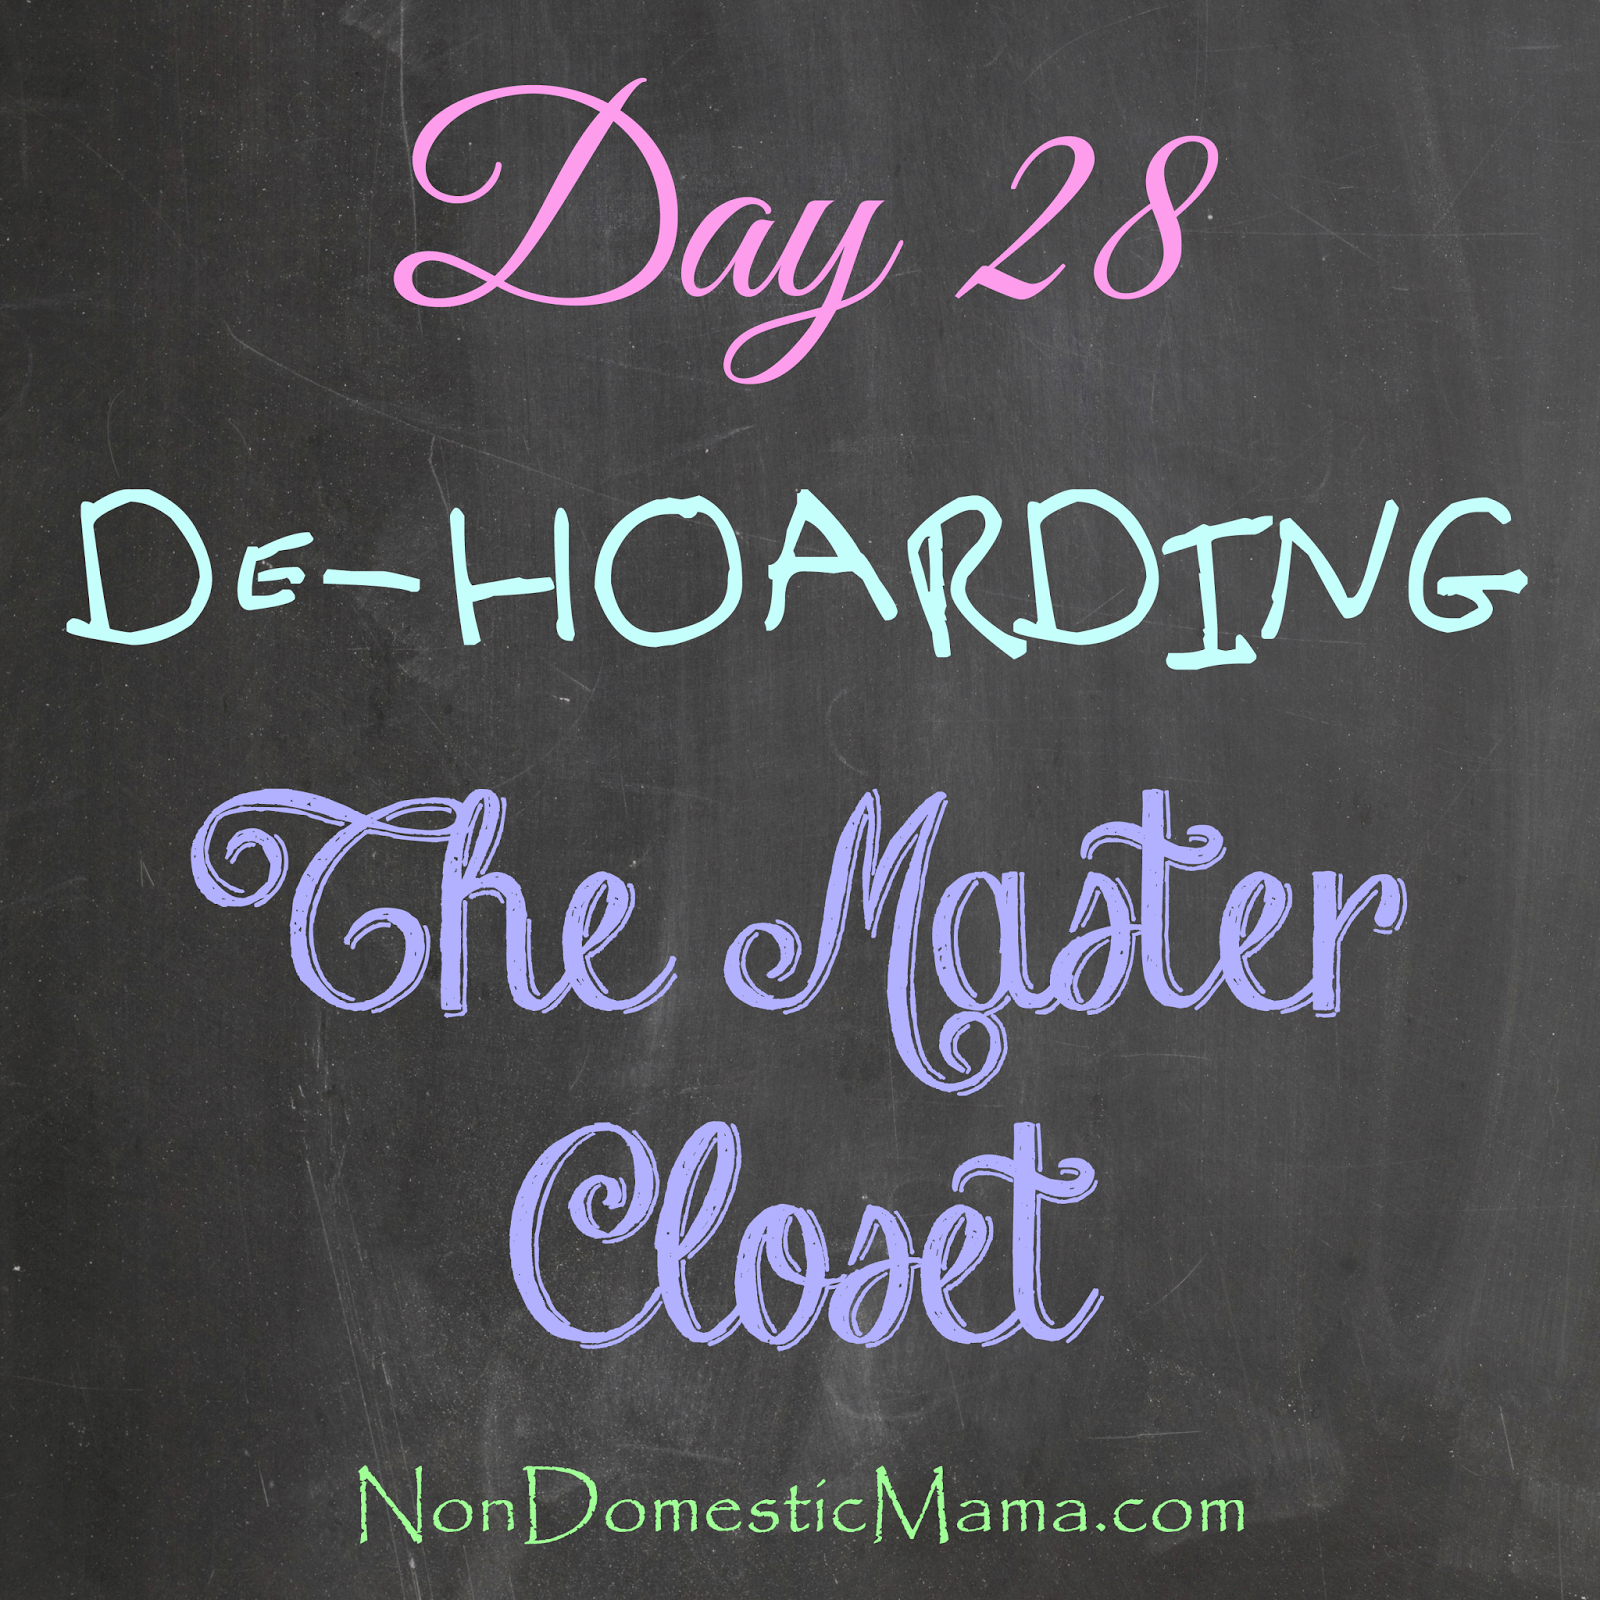 {Day 28} Closet - 31 Days of De-Hoarding #write31days #dehoarding